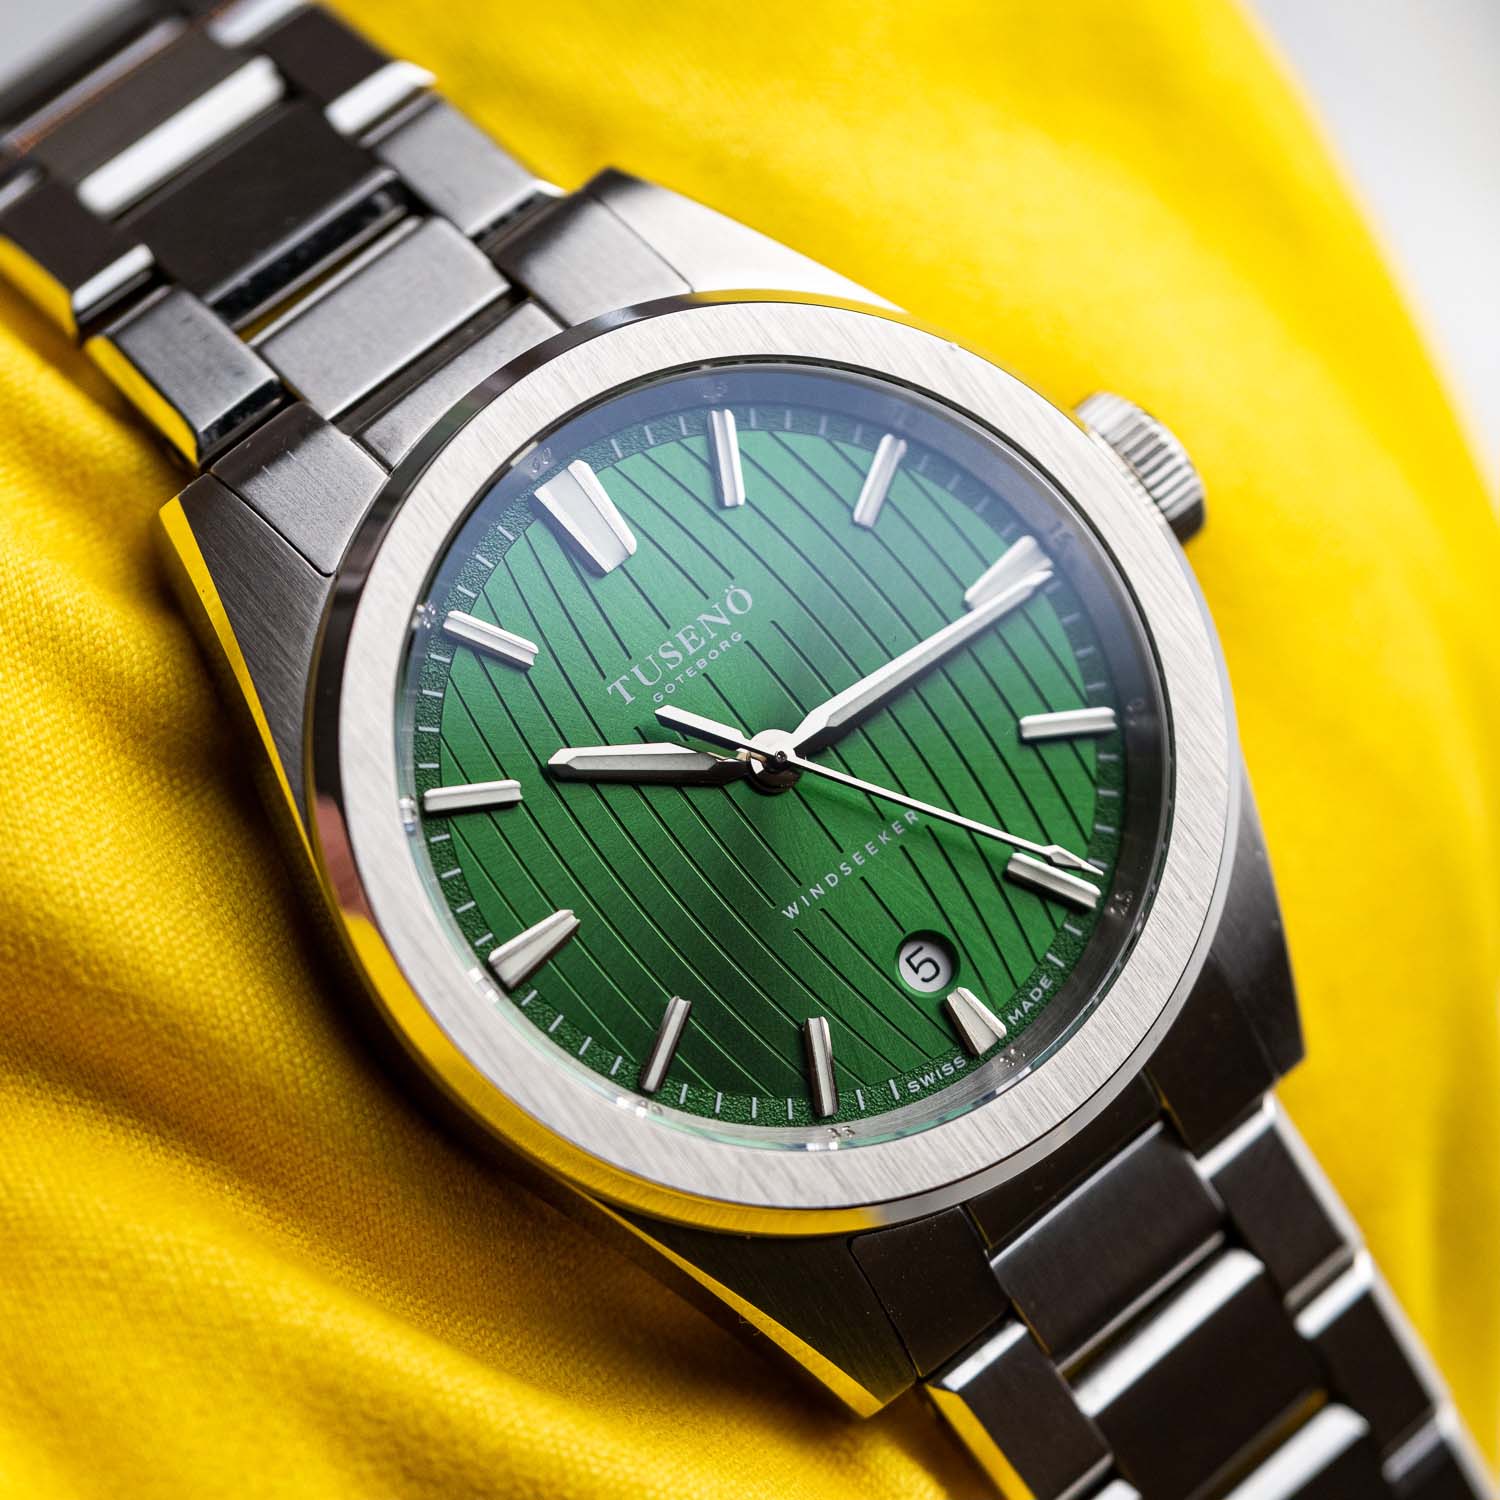 Windseeker Green | Tusenö, Swedish automatic watches online since 